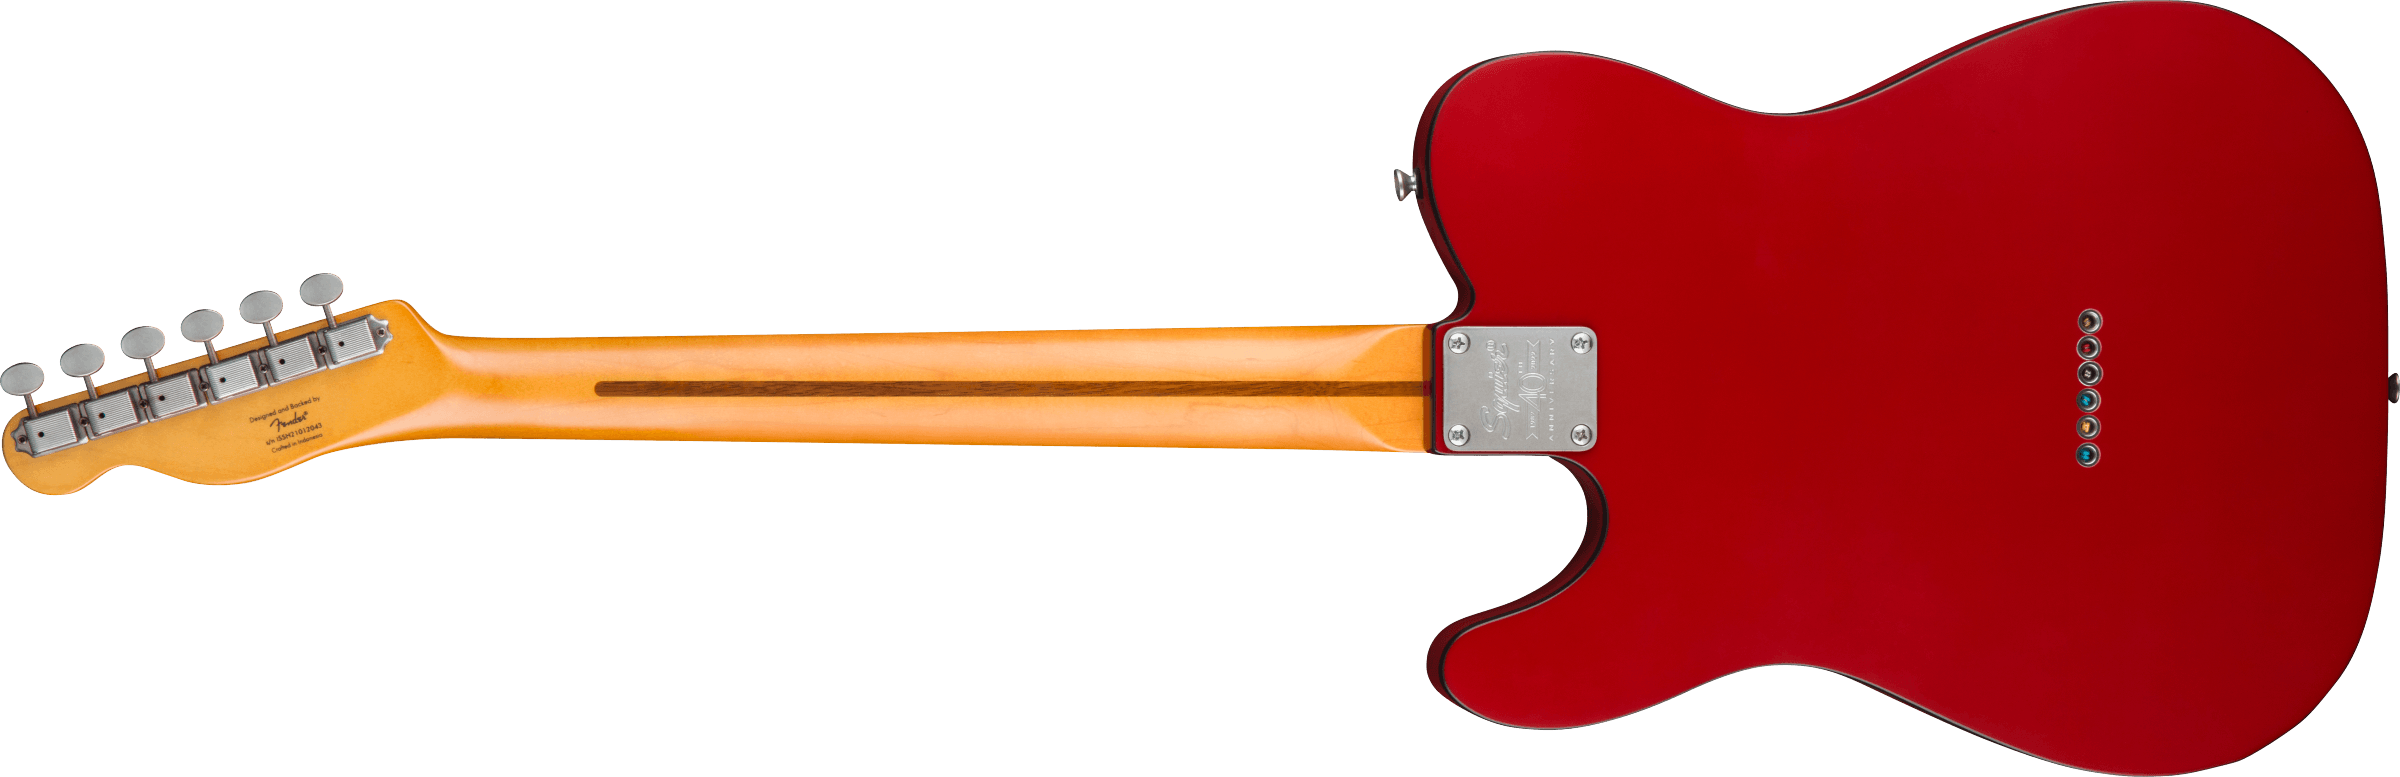 Squier Tele 40th Anniversary Vintage Edition Mn - Satin Dakota Red - Tel shape electric guitar - Variation 1